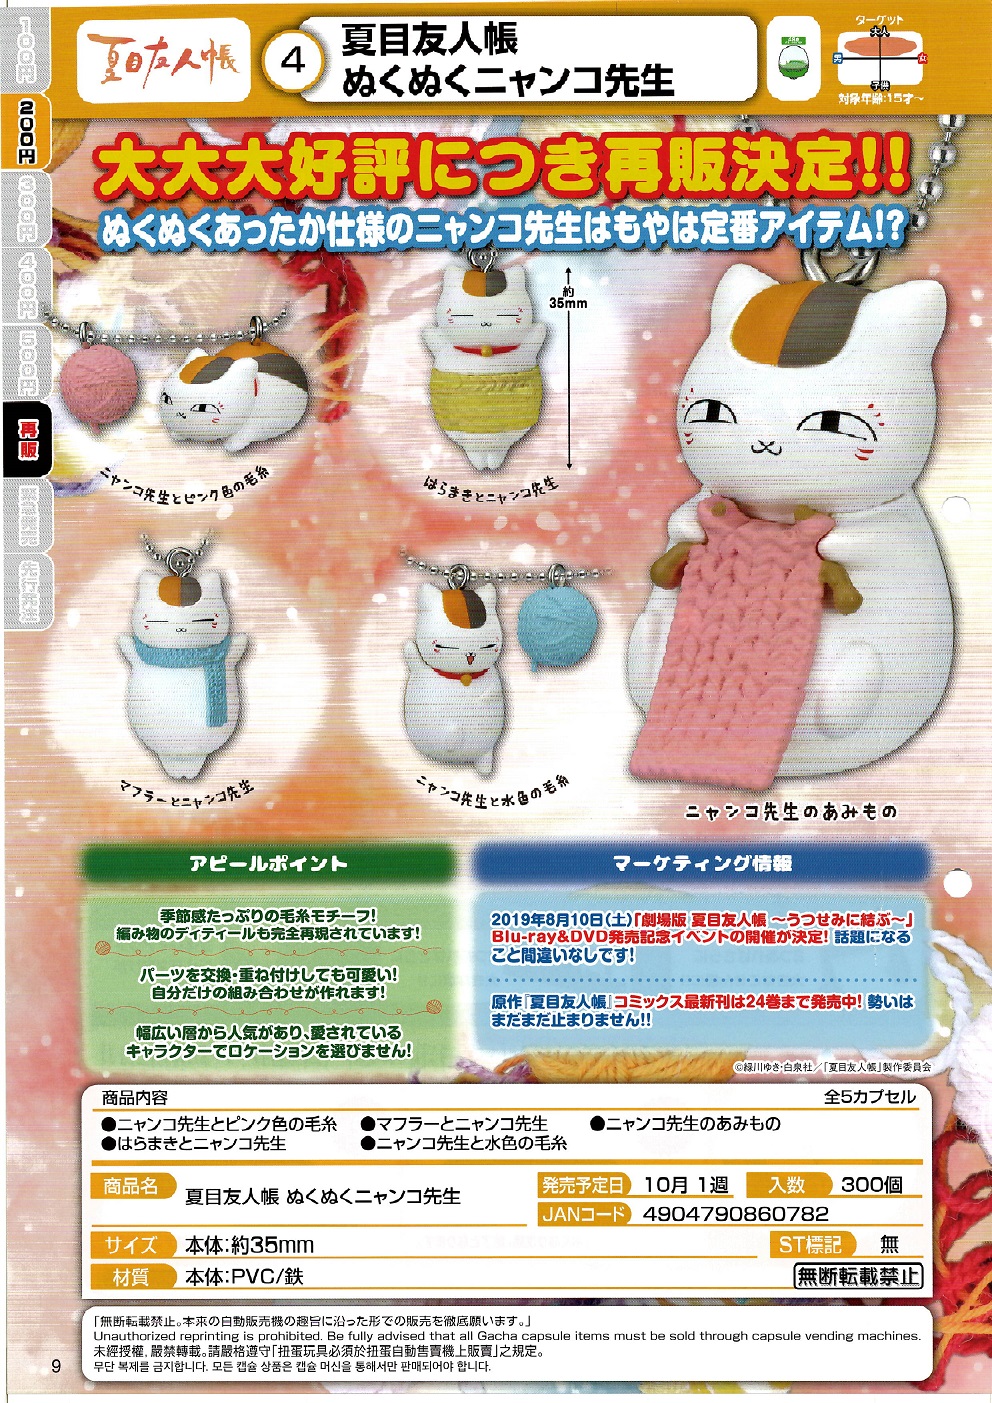 【B】200日元扭蛋 小手办挂件 夏目友人帐 猫老师与绒线  全5种 (1袋50个) 860782